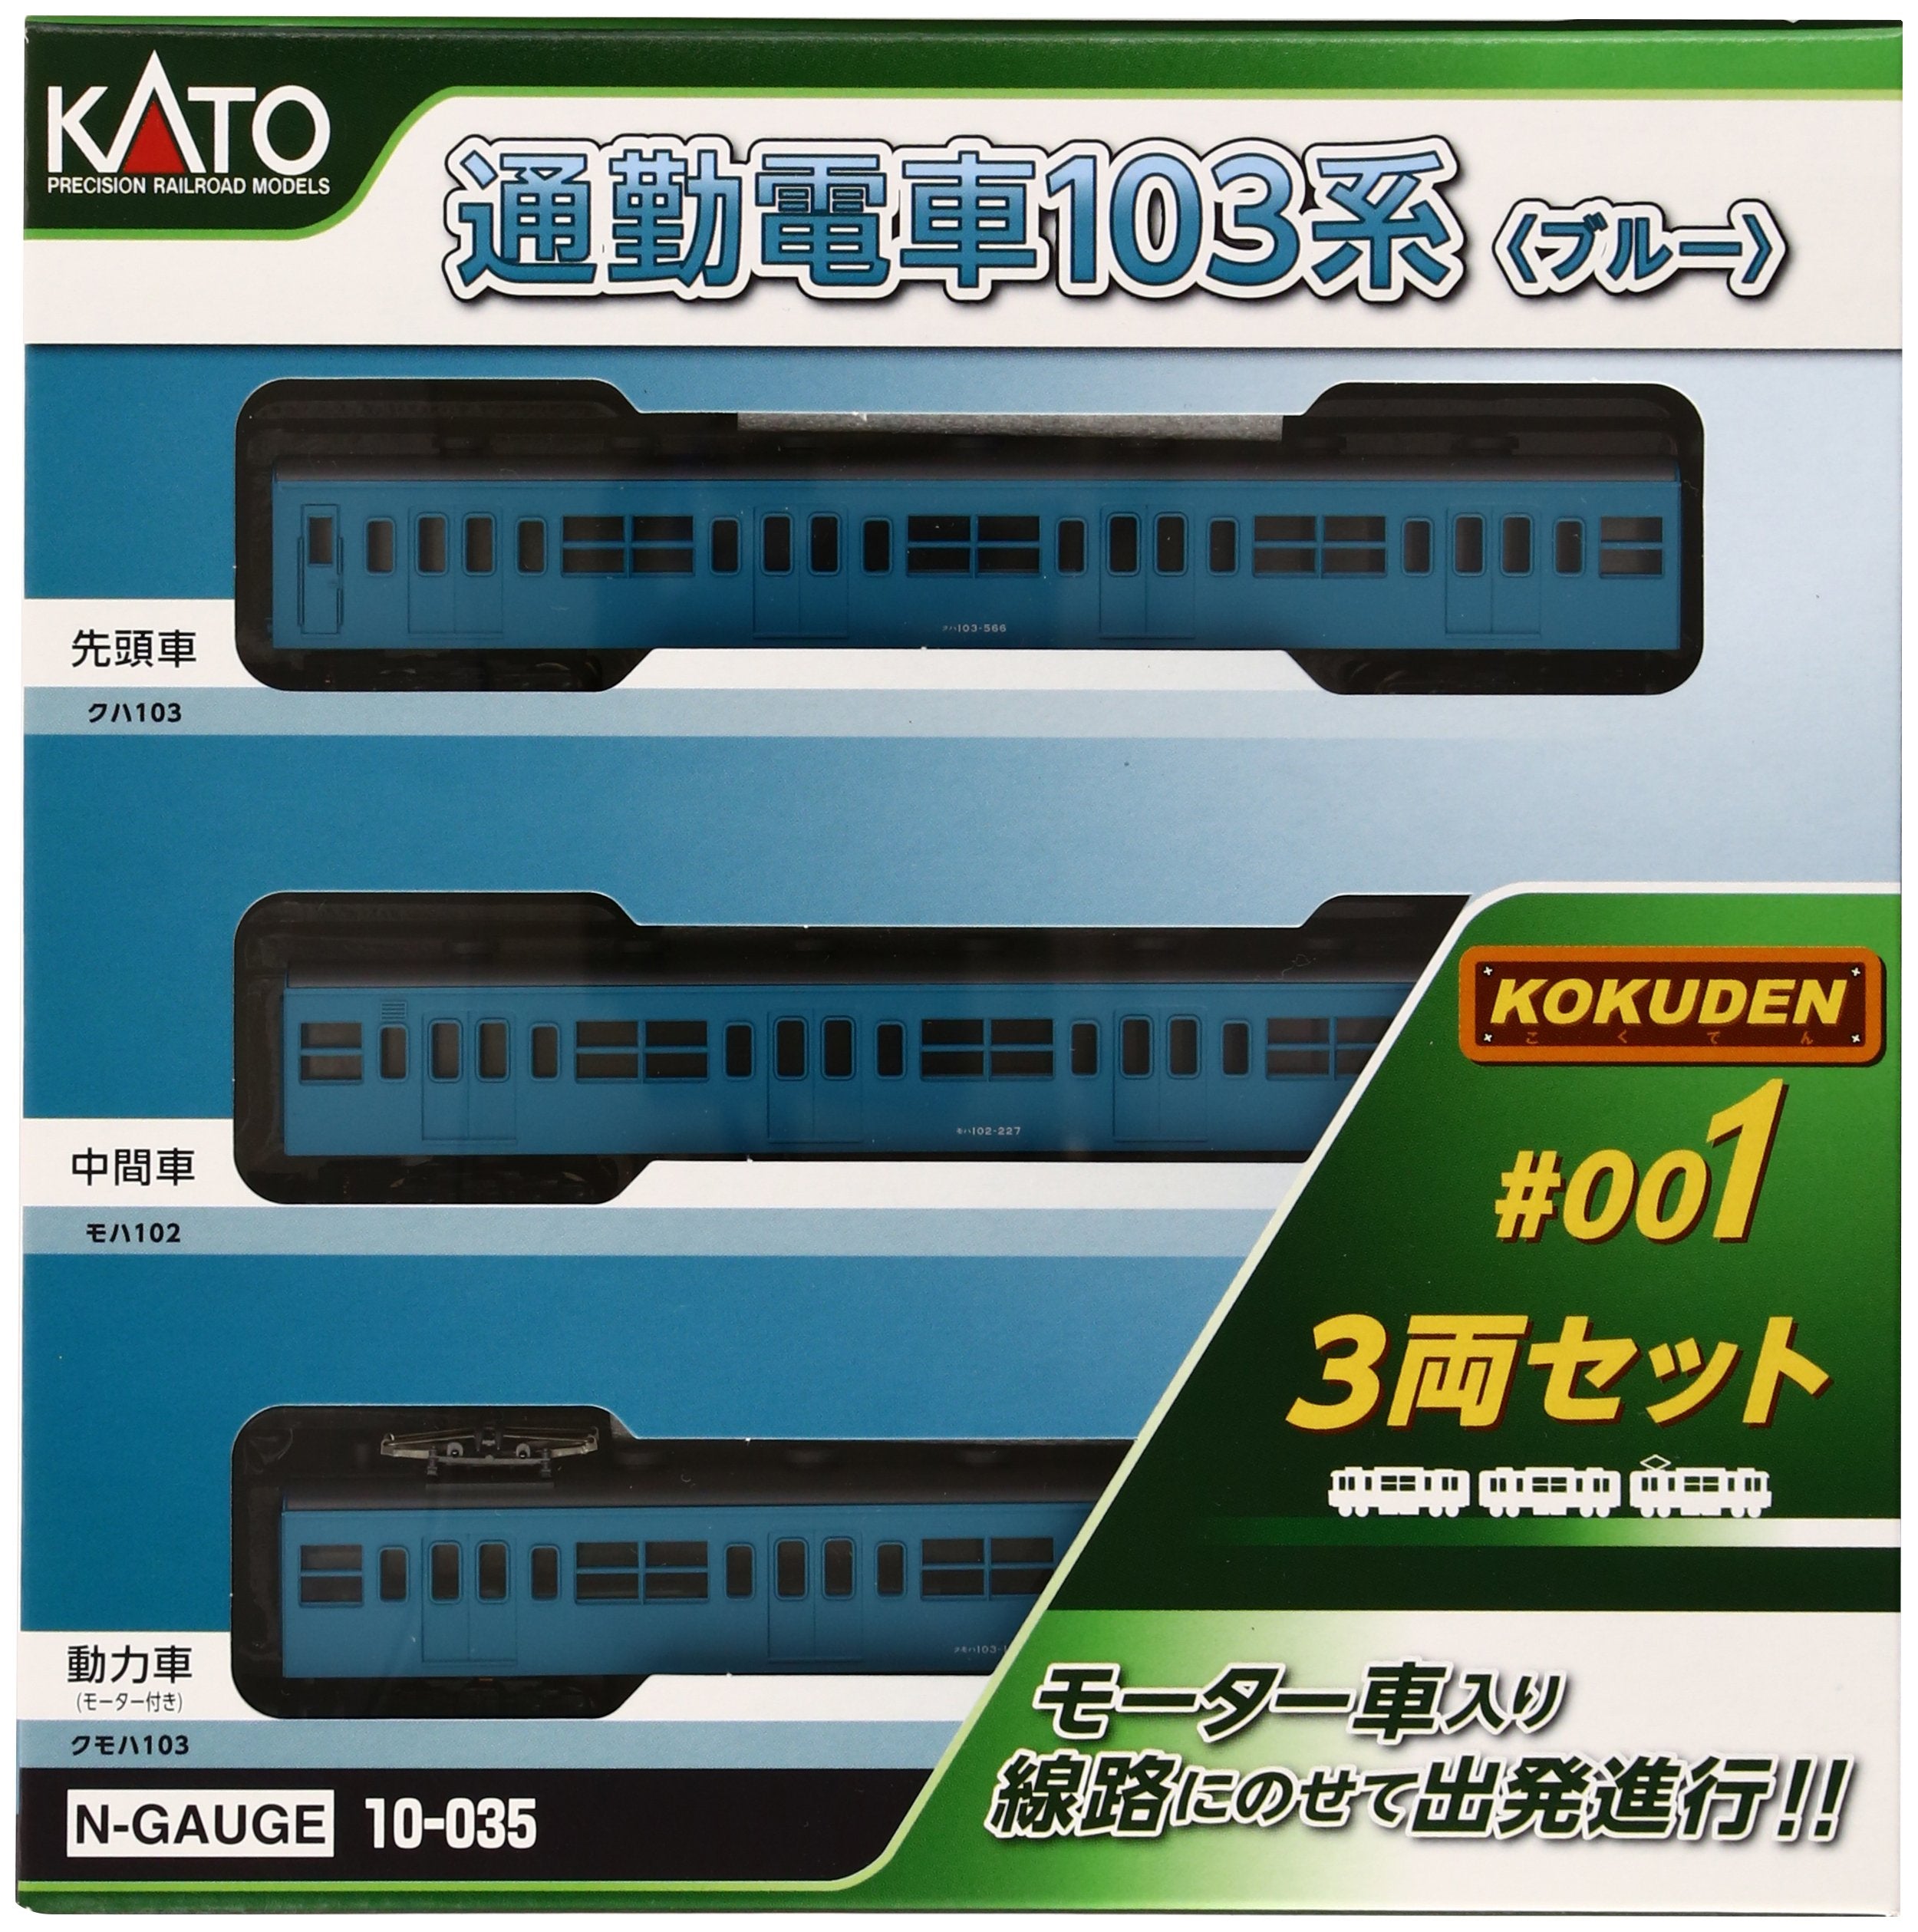 KATO N gauge commuter train series 103 KOKUDEN-001 blue 3-car set 10-035 NEW